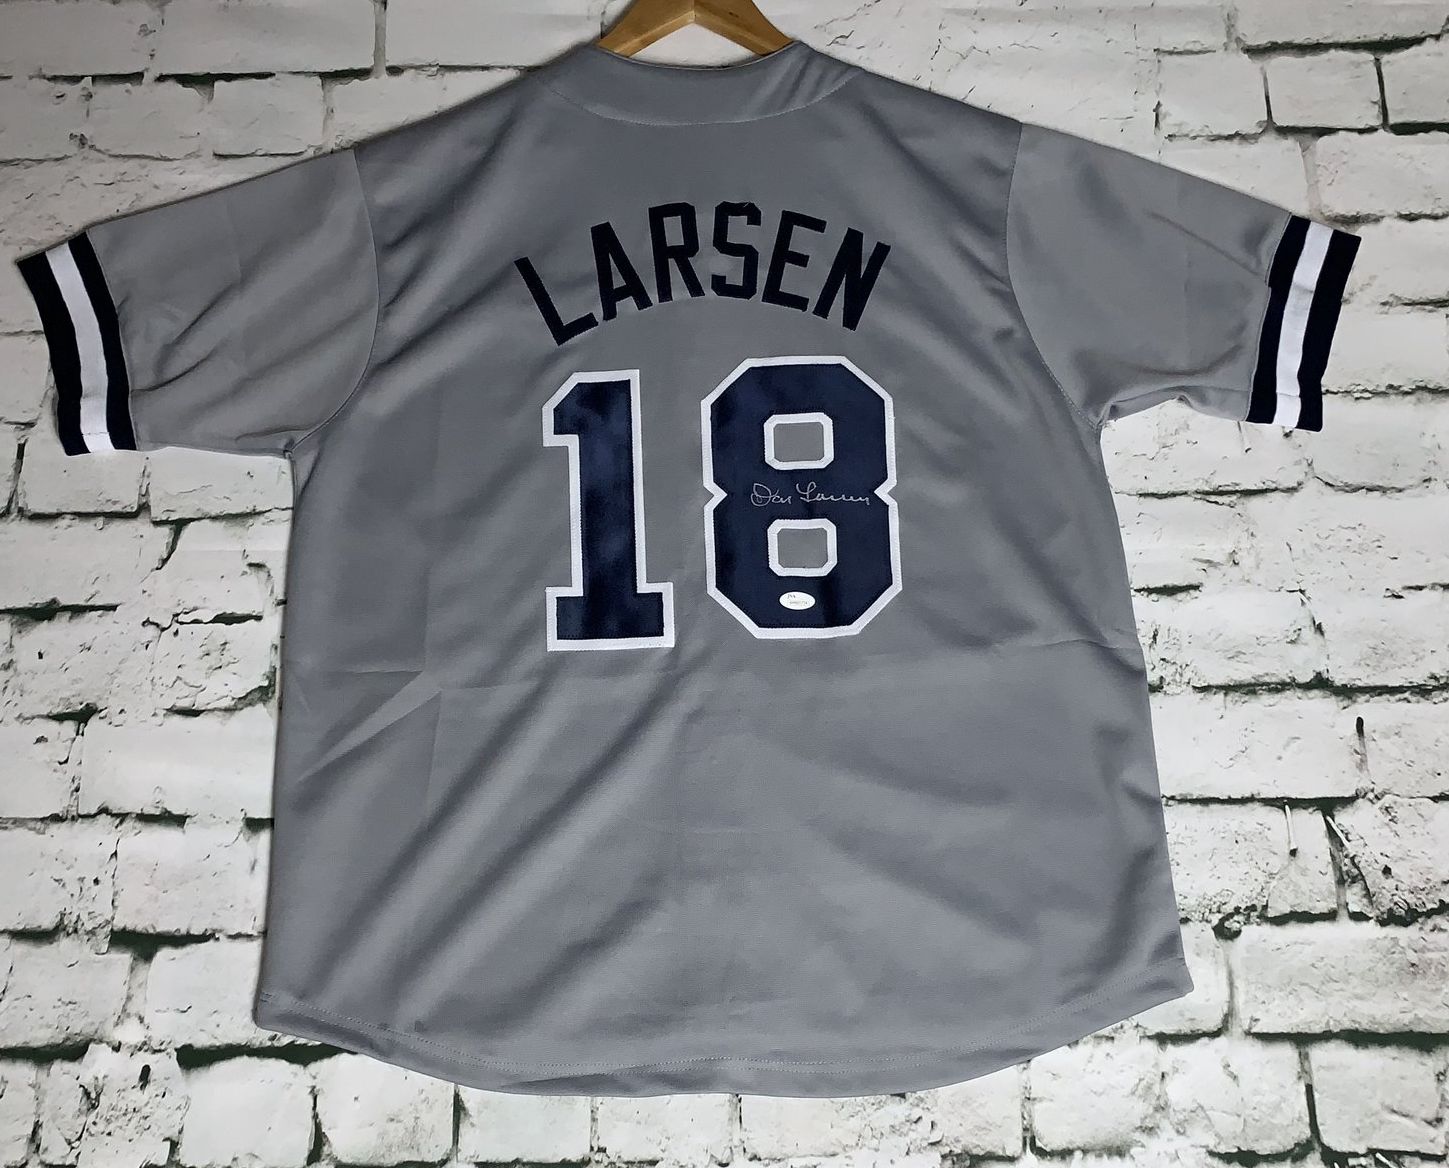 Don Larsen Signed Autographed Jersey NY Yankees WS PG 10-8-56 PSA V19534